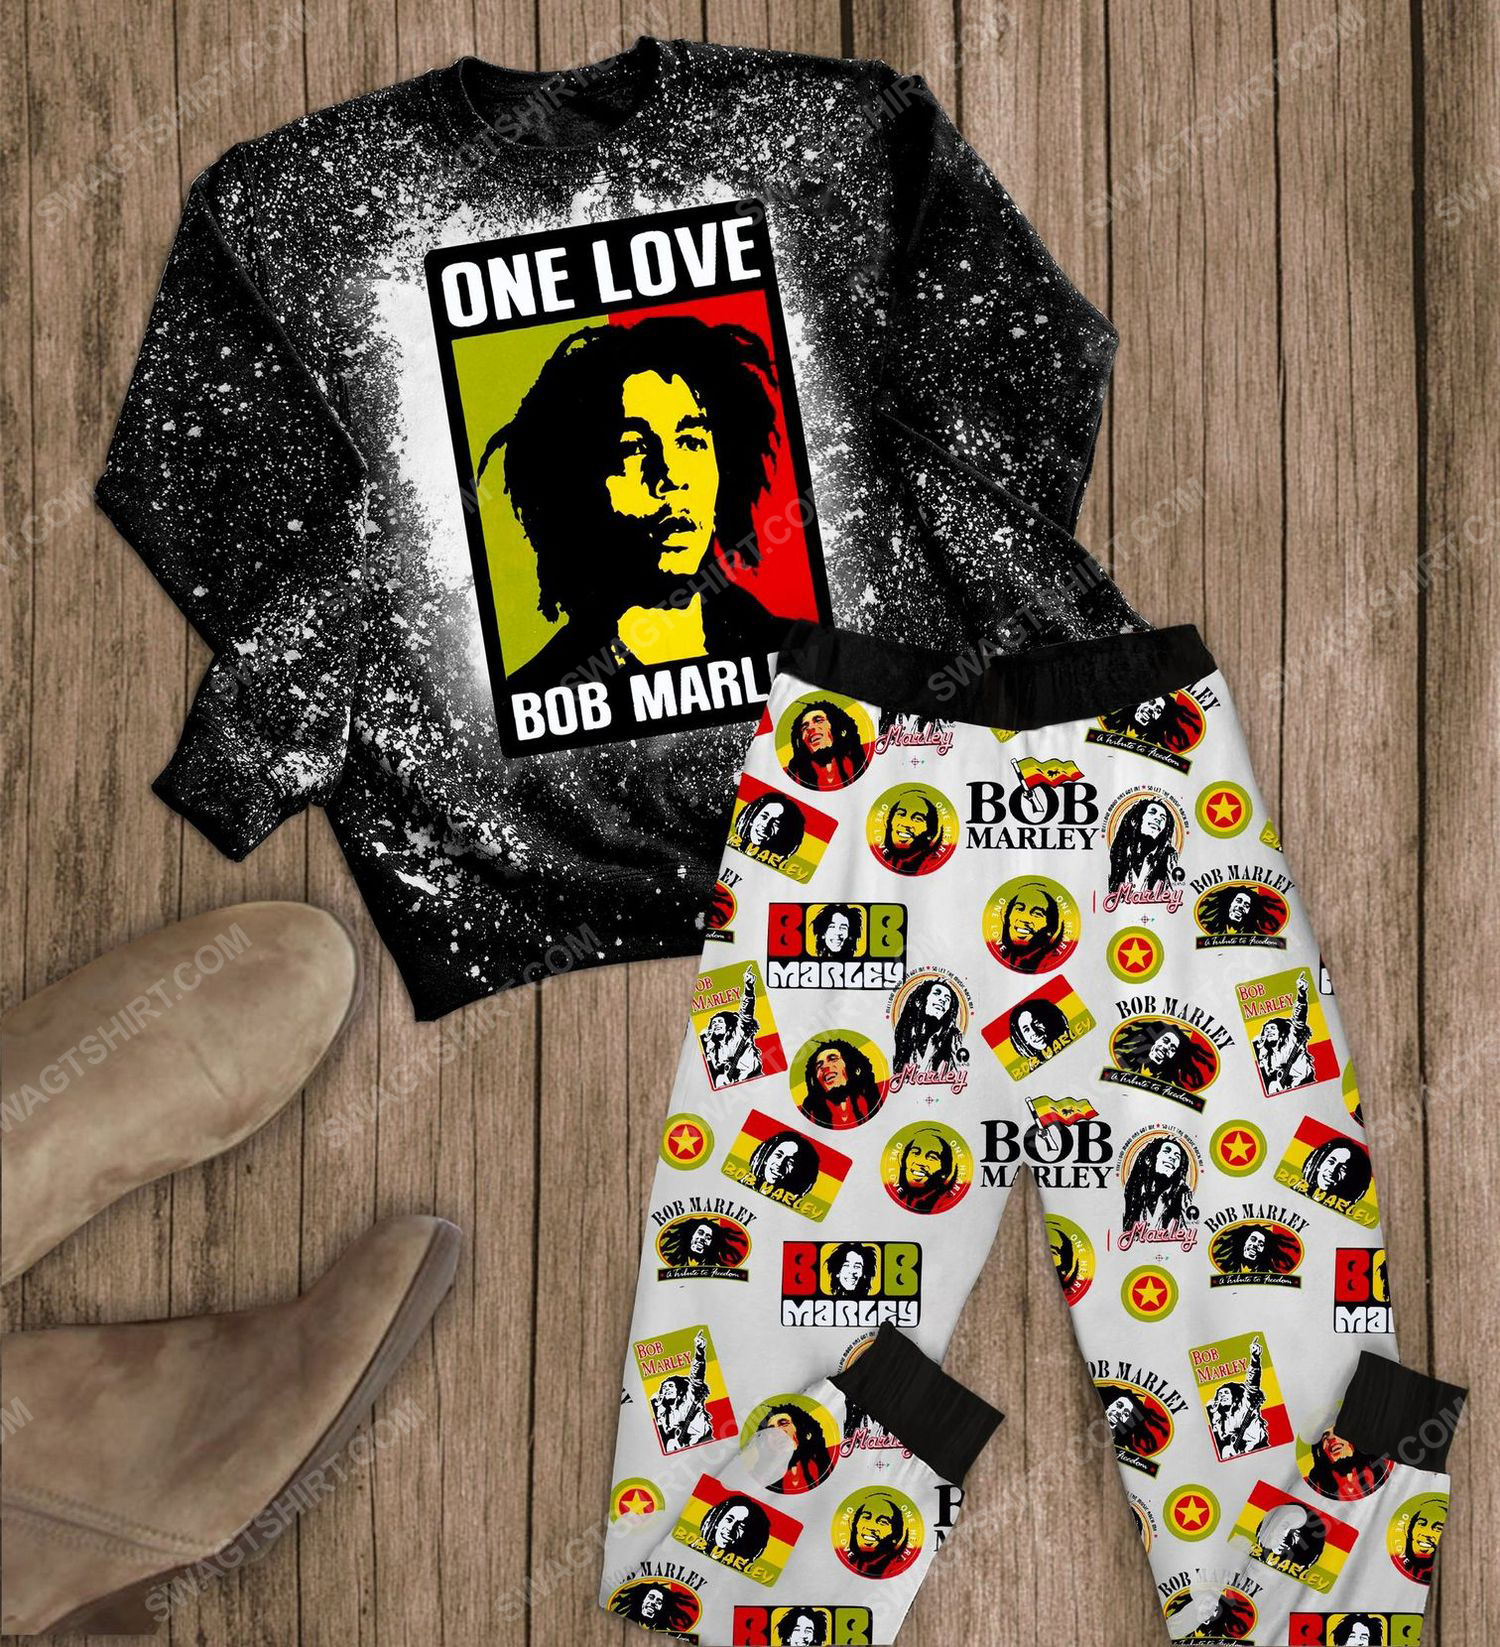 Bob marley one love full print pajamas set 1 - Copy